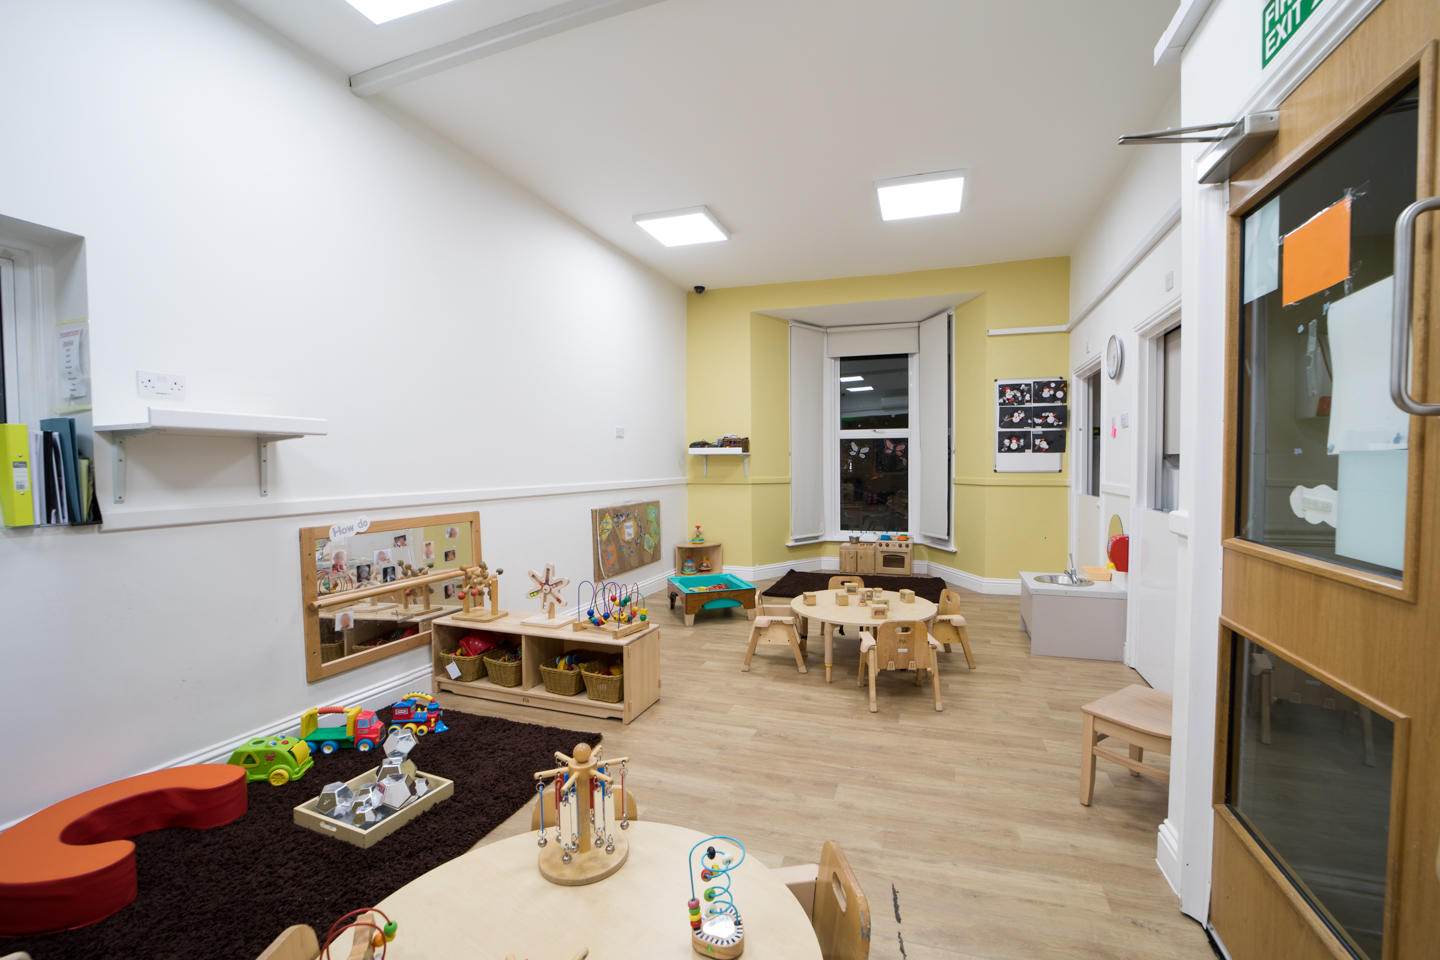 Bright Horizons North Finchley Day Nursery and Preschool London 03332 204791